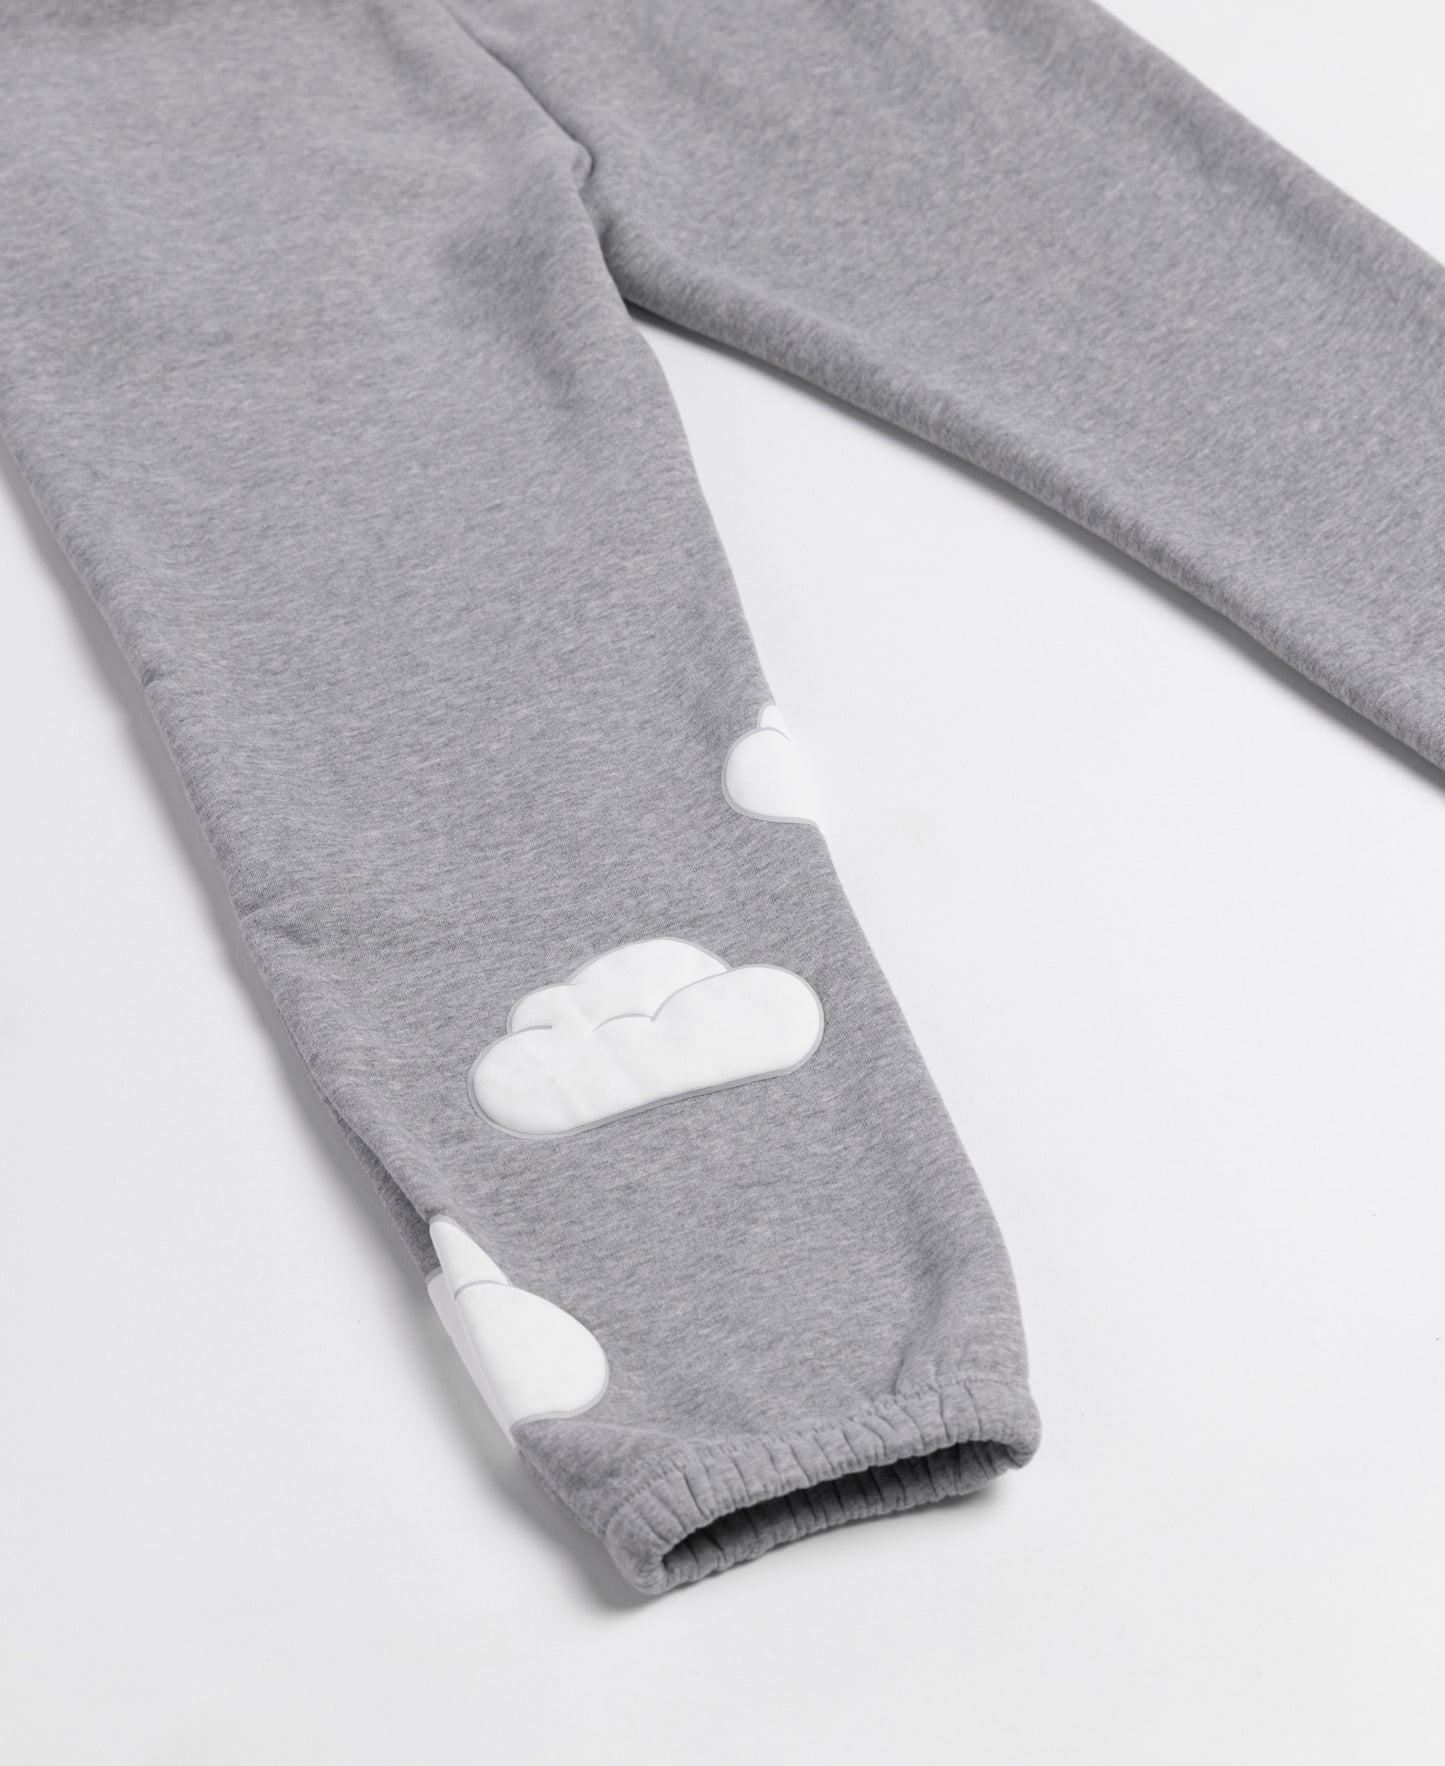 The Comf Cloud Pant "Grey"